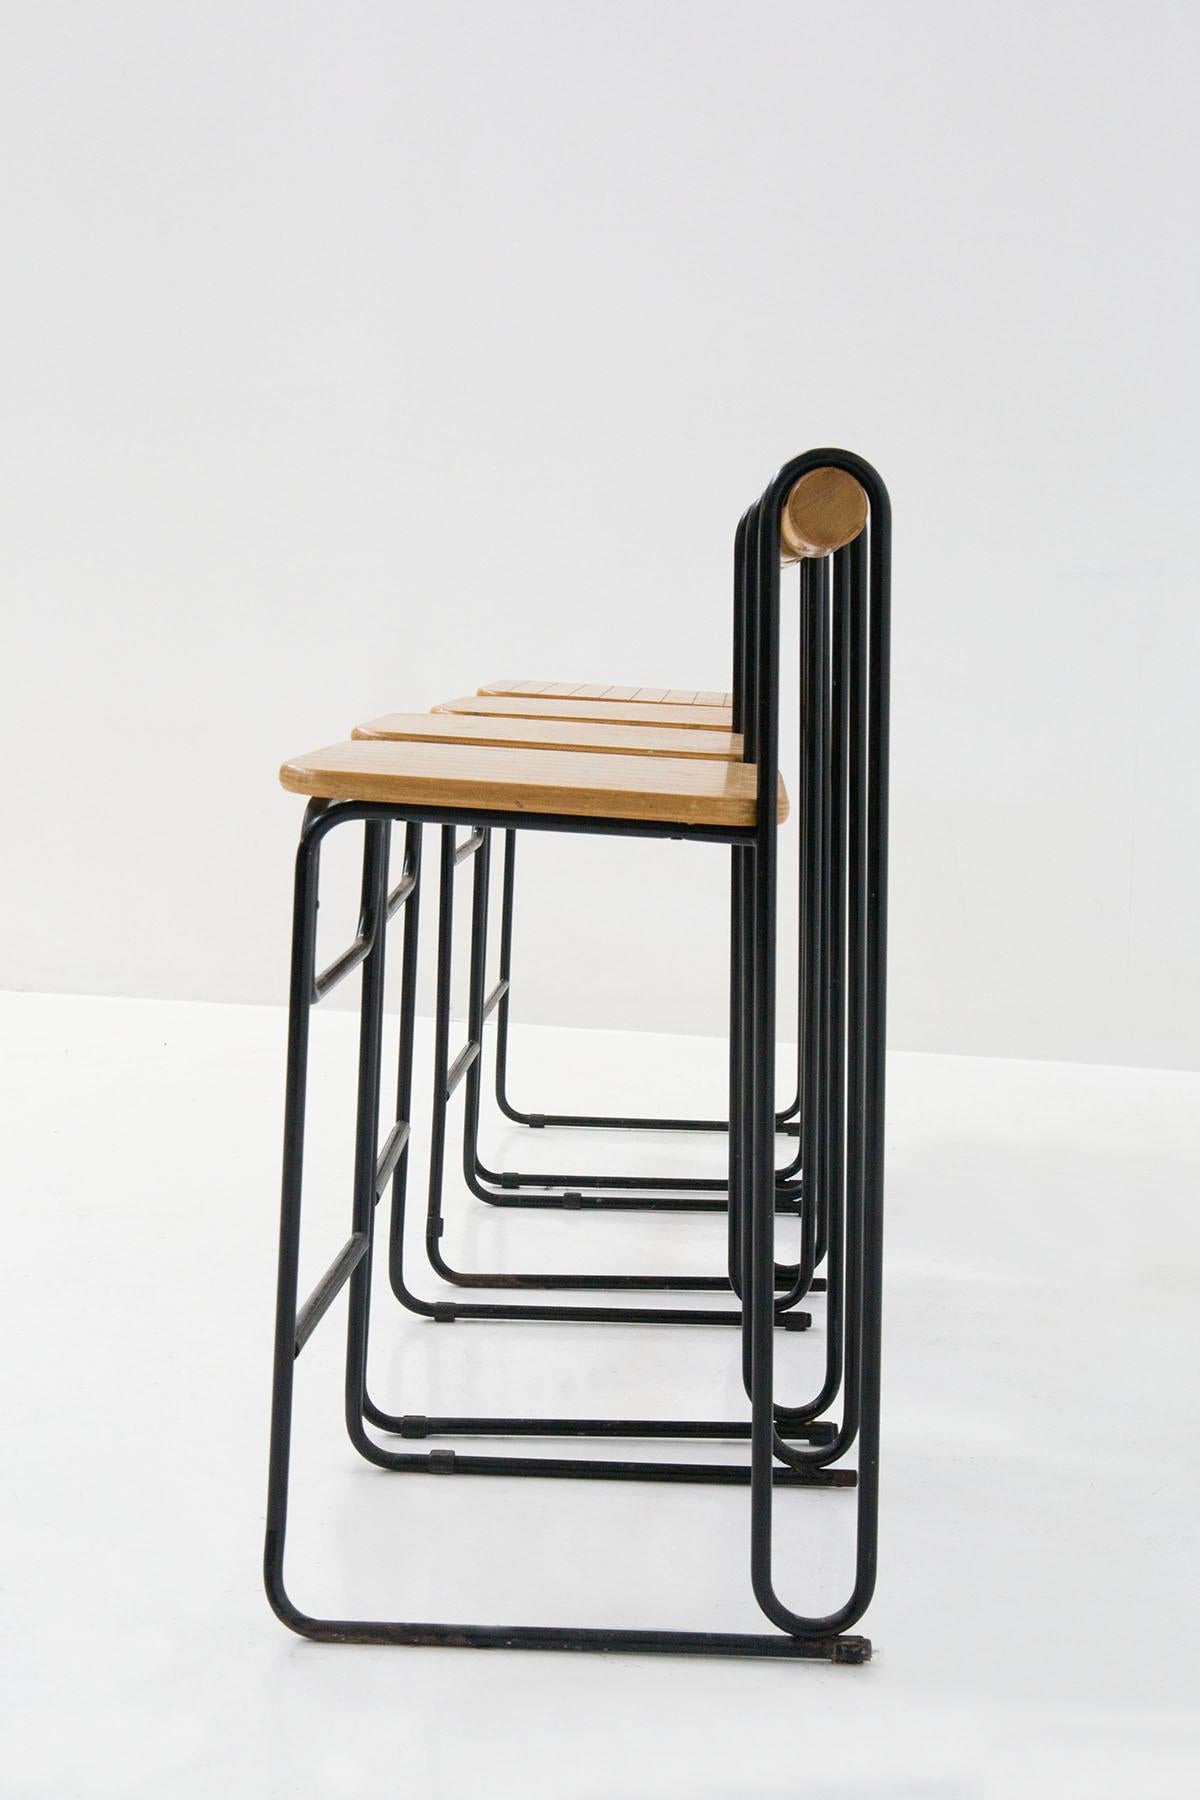 Geometric Italian Modern High Chairs Set of Four in Iron and Wood 8